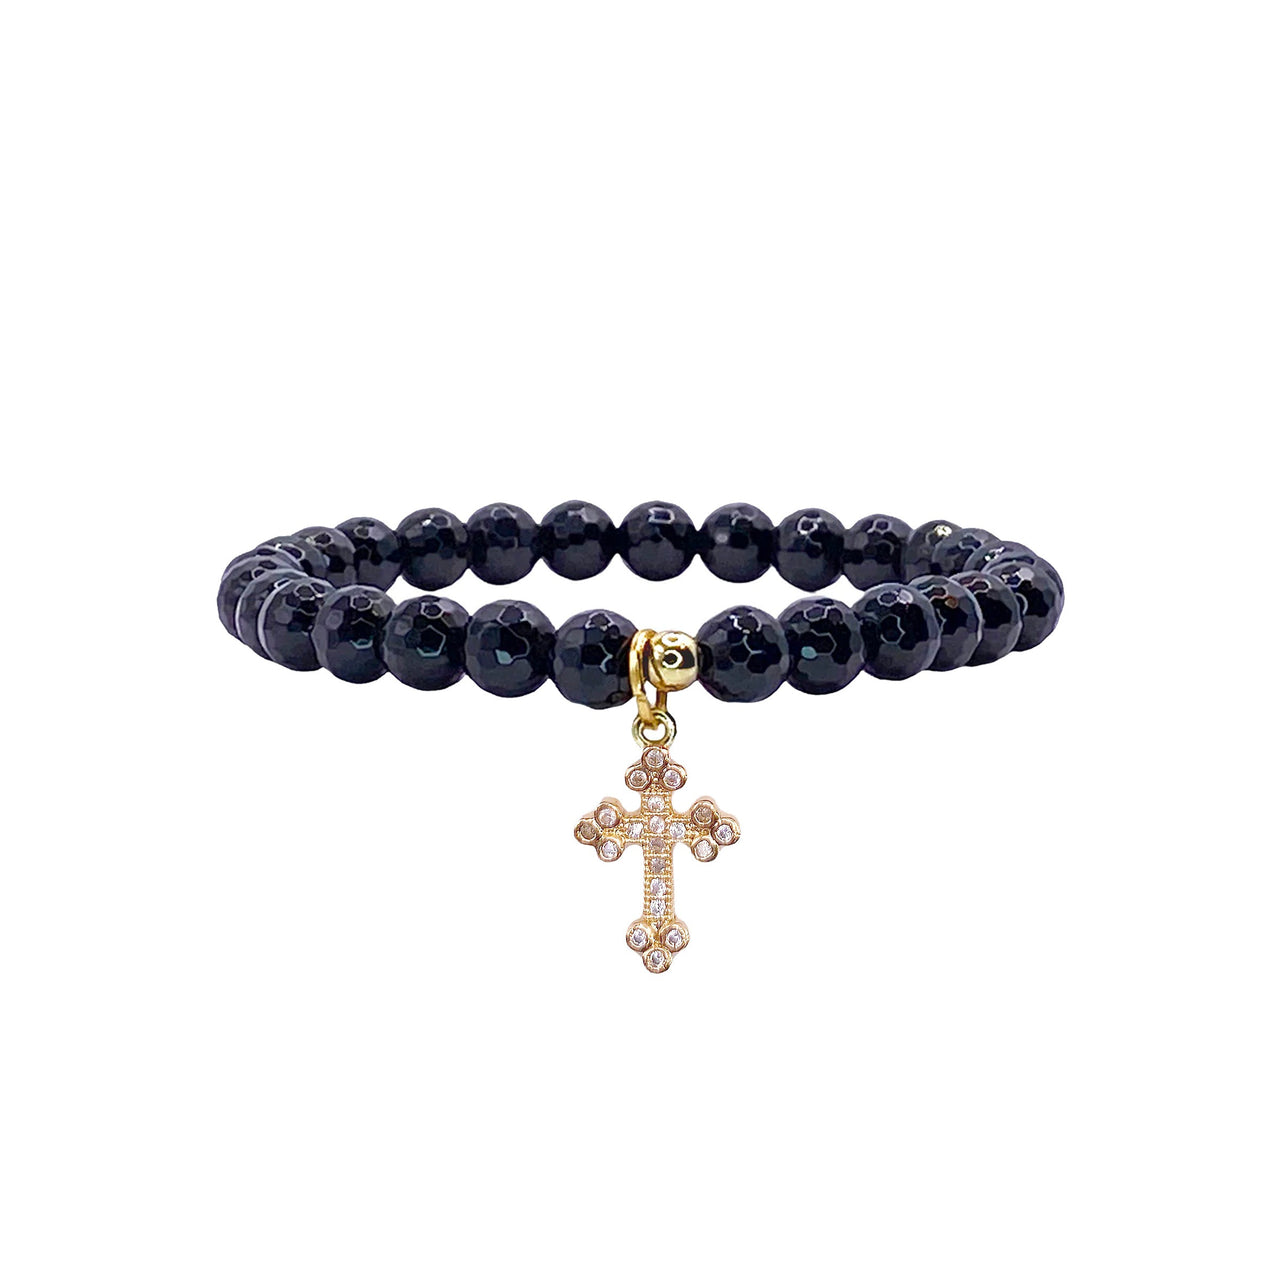 Meri Cross Bracelet